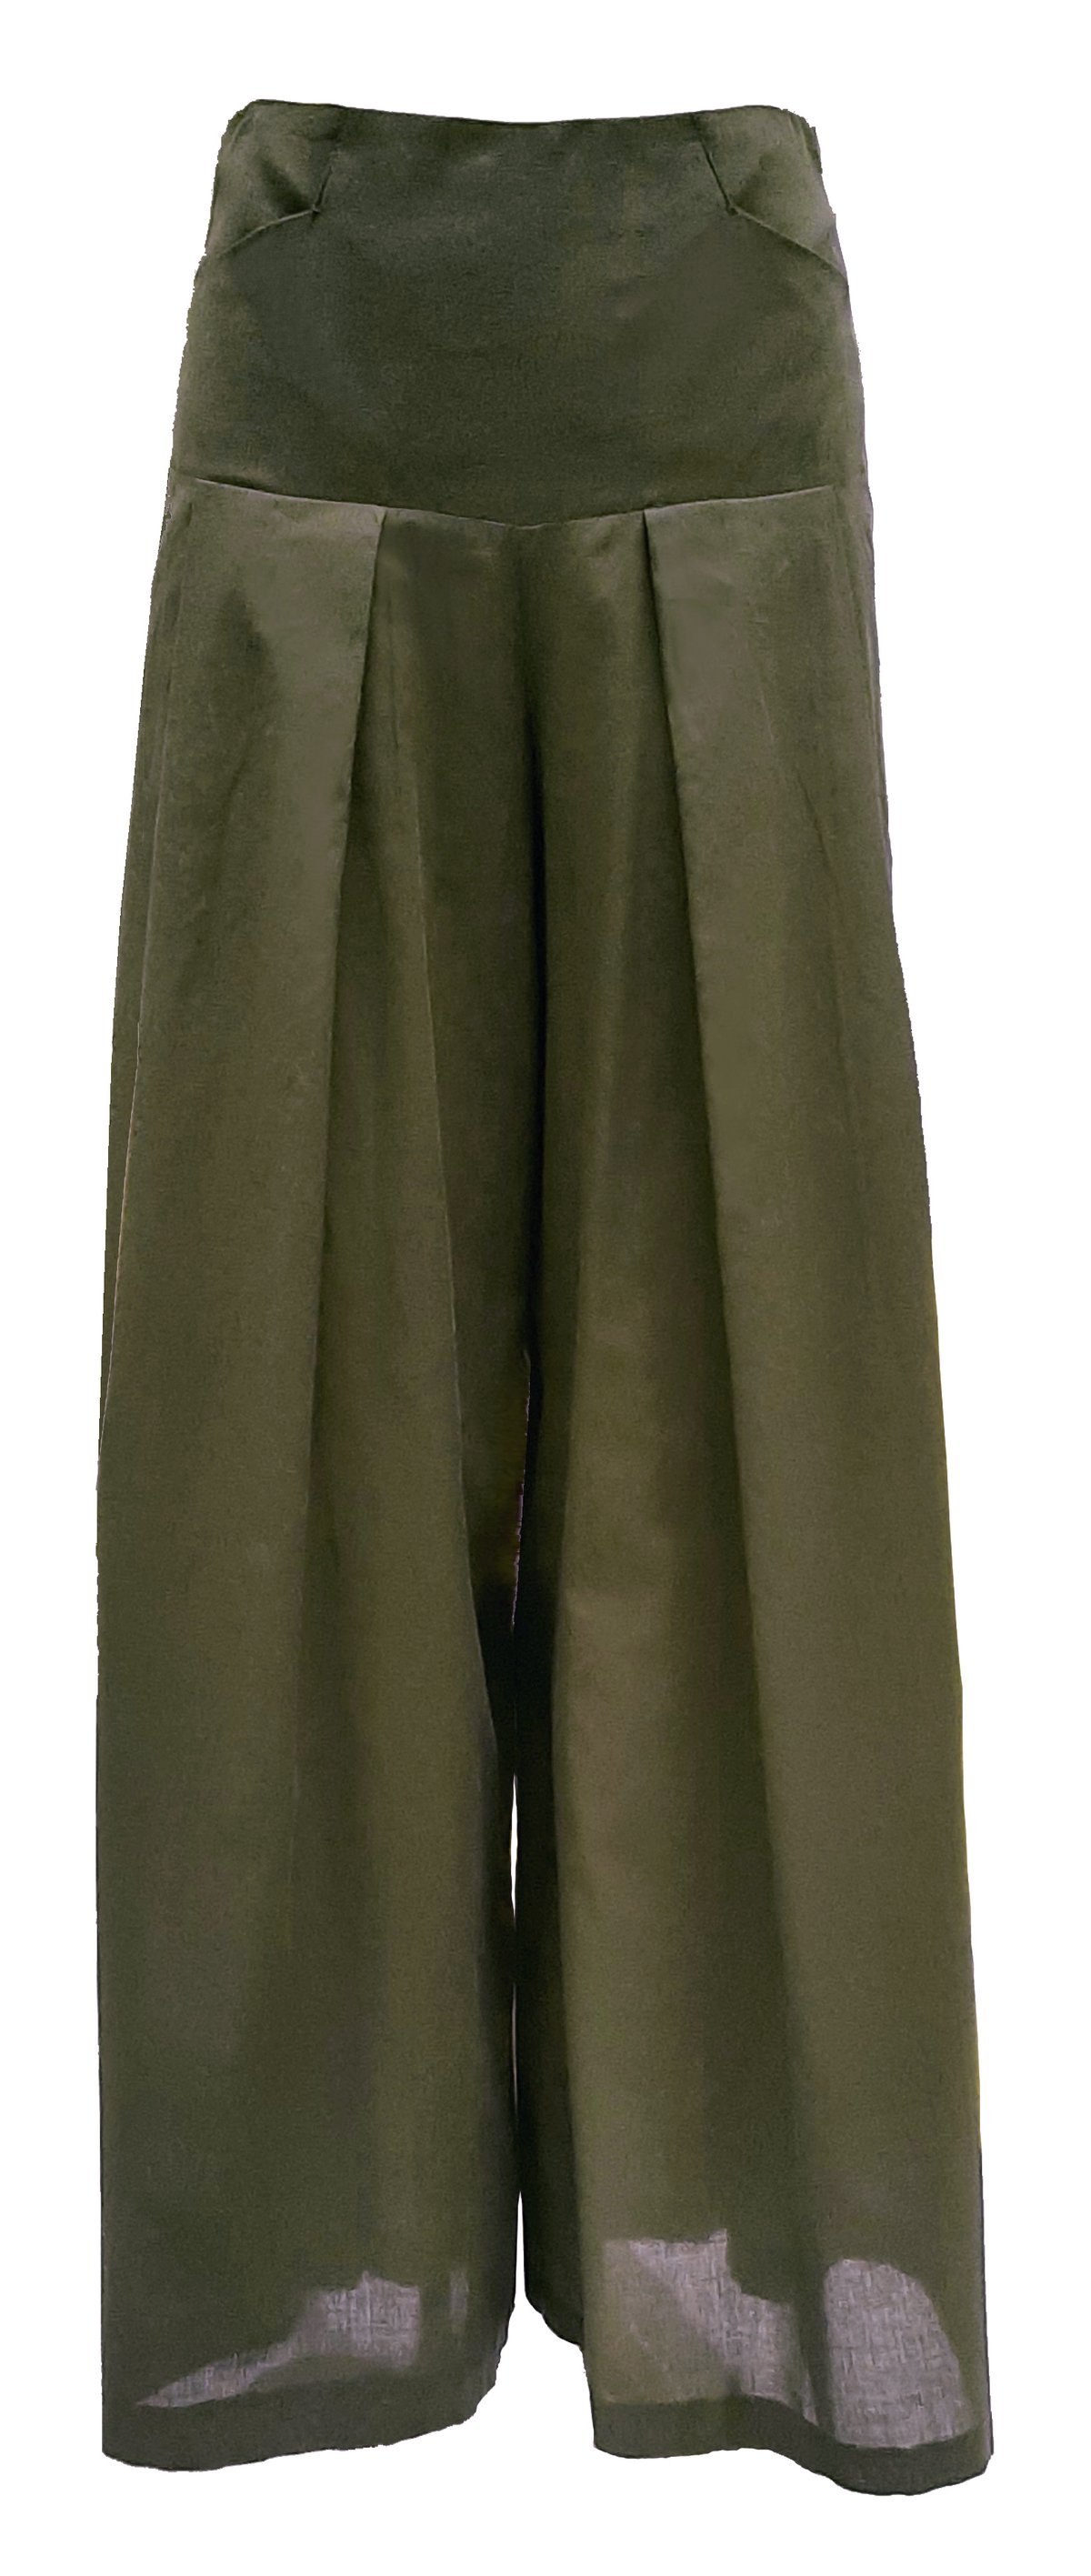 Image of Karacha pants in Olive